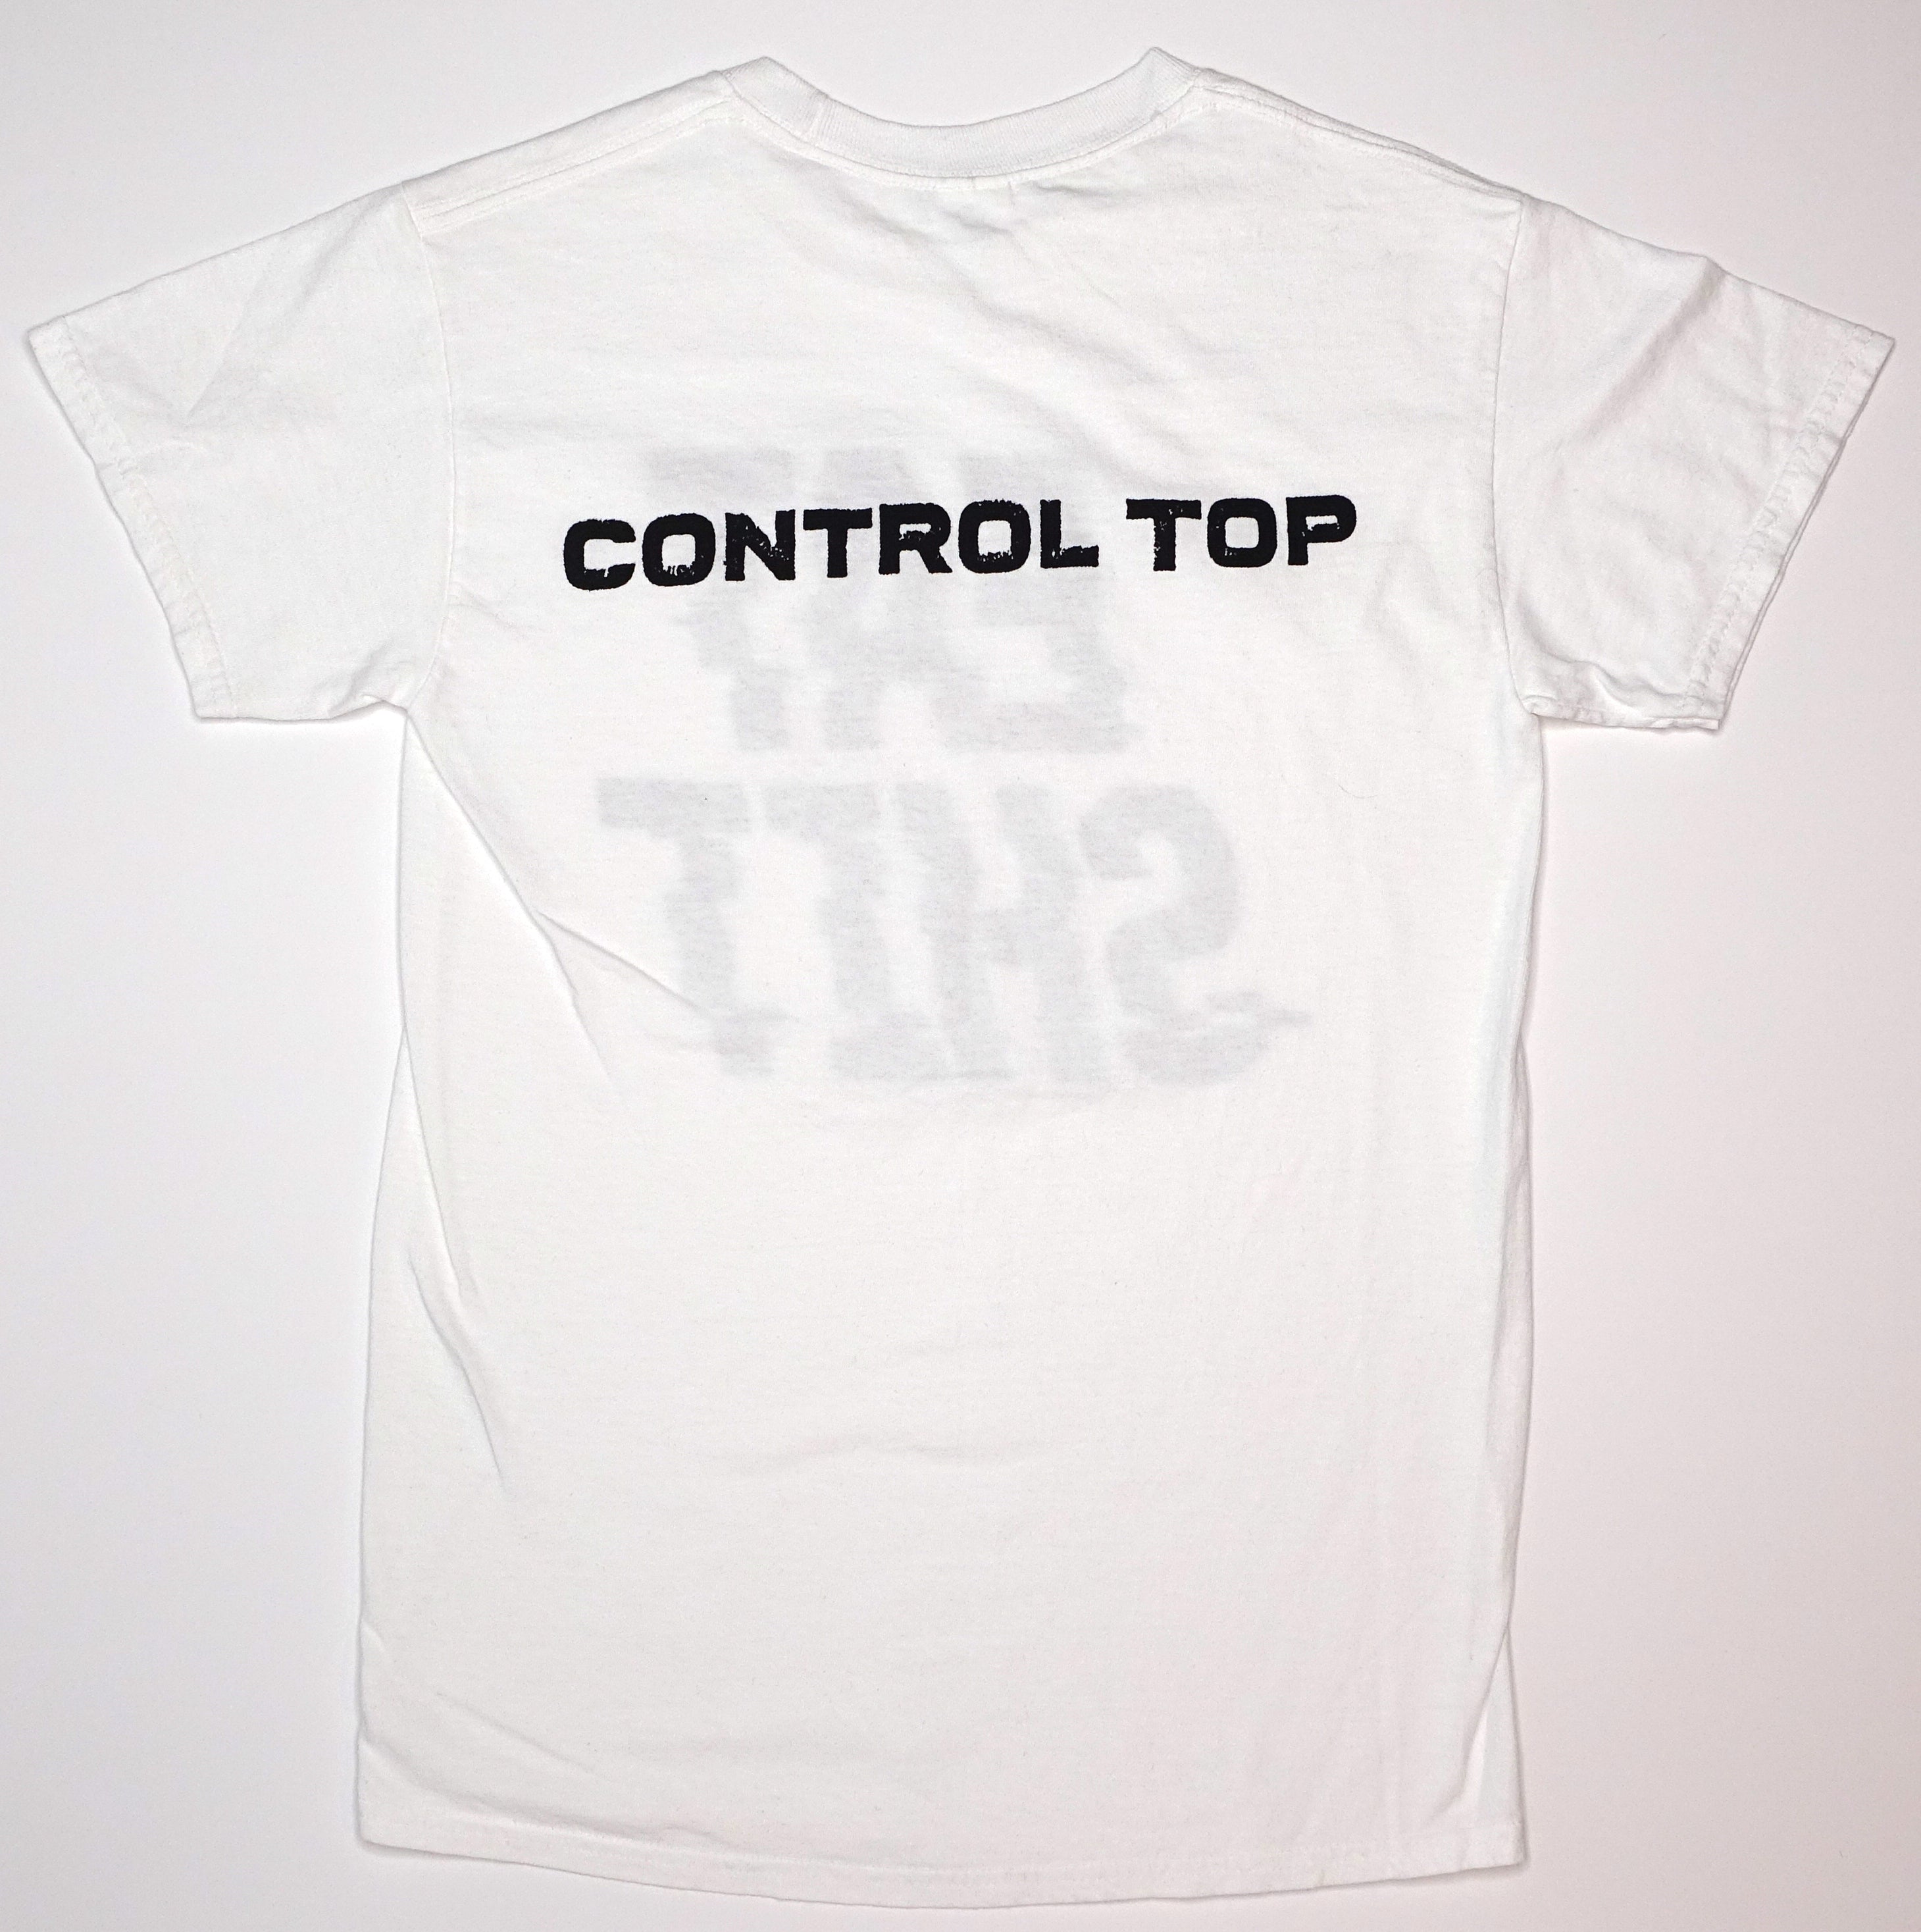 Control Top – Eat Shit 2019 Tour Shirt Size Small